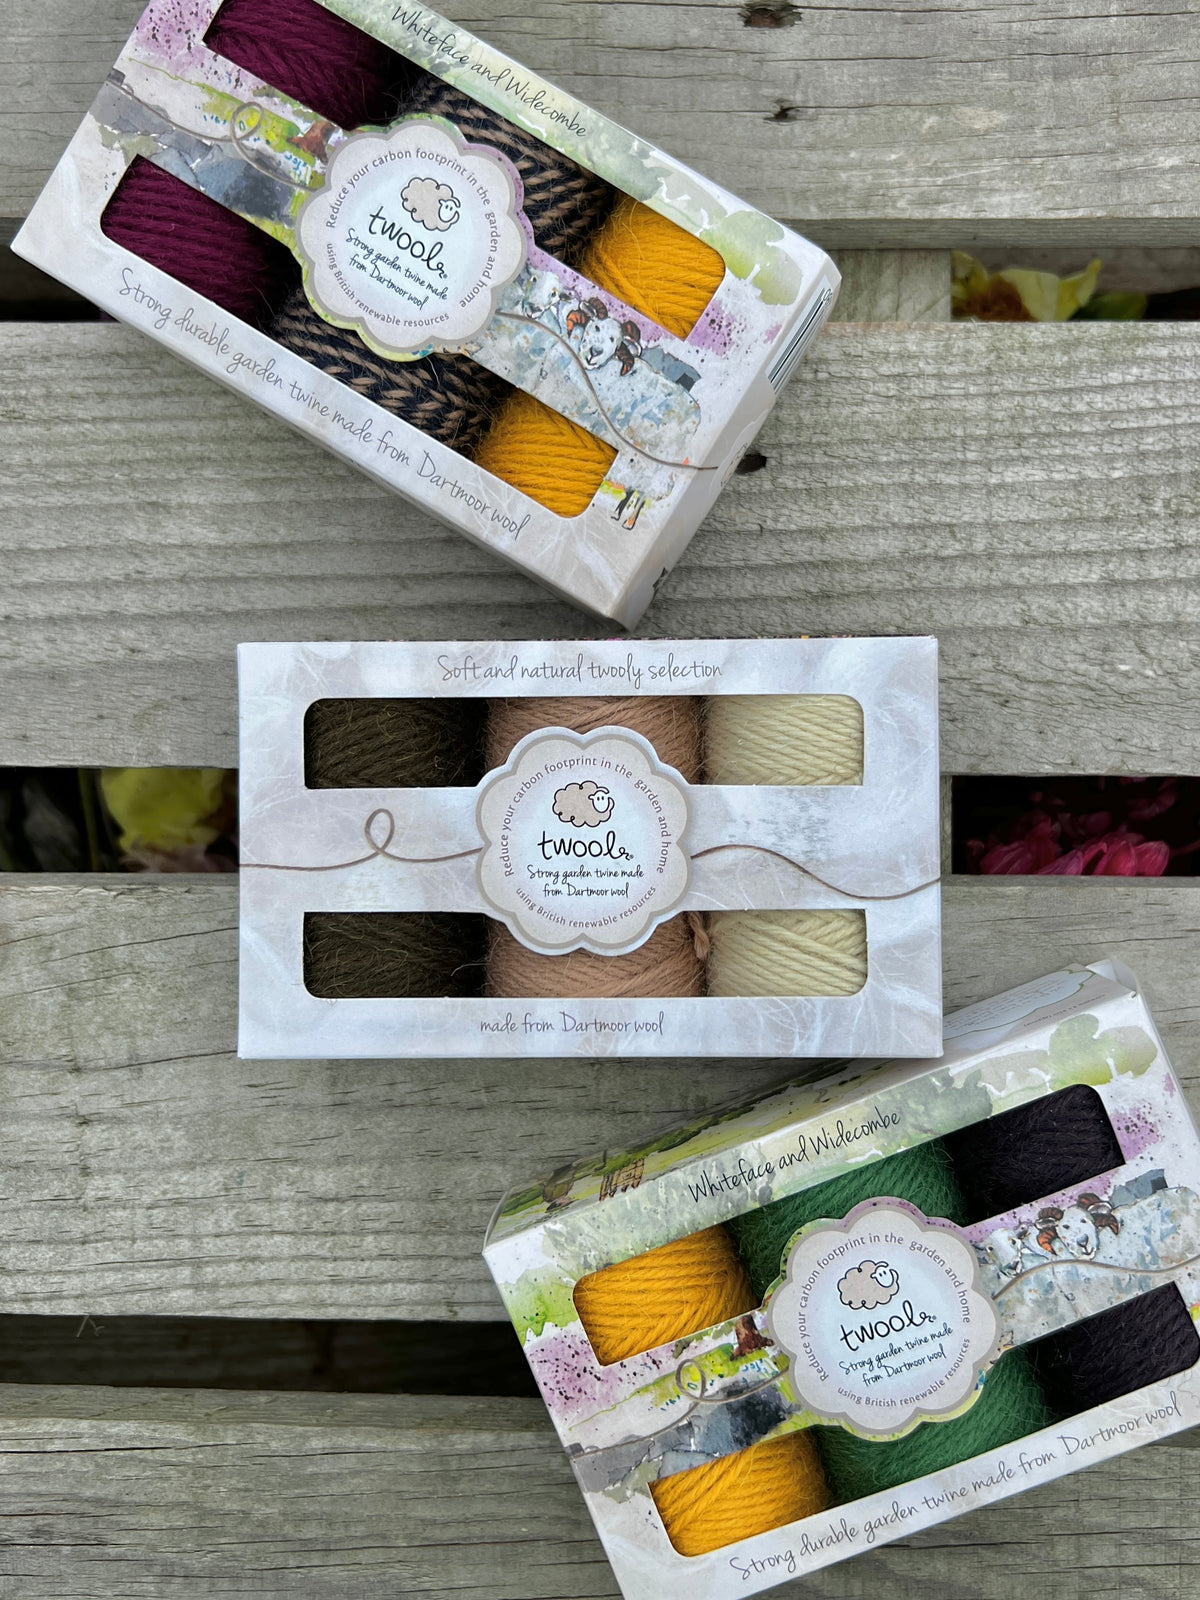 Twool Sustainable Wool Garden Twine Gift Box, Yellow/Green/Purple